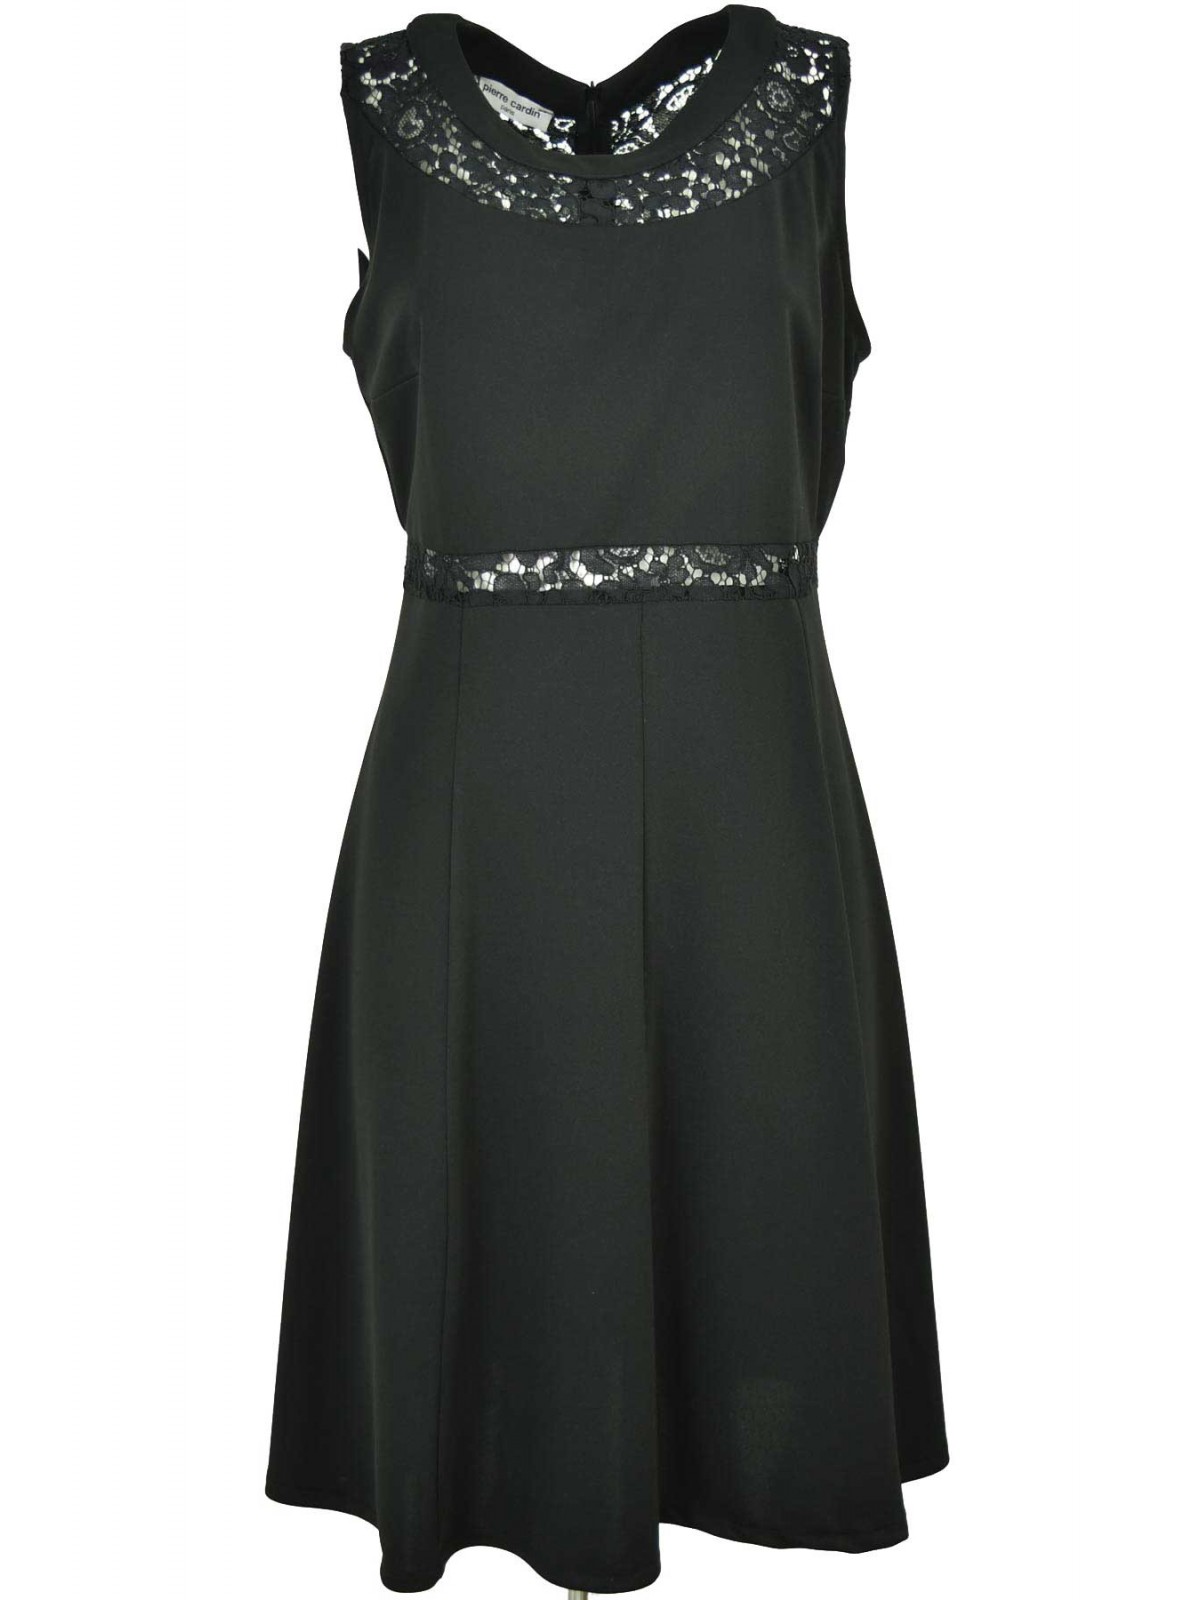 Vestido tubo de mujer elegante tirantes de encaje negro - Pierre Cardin